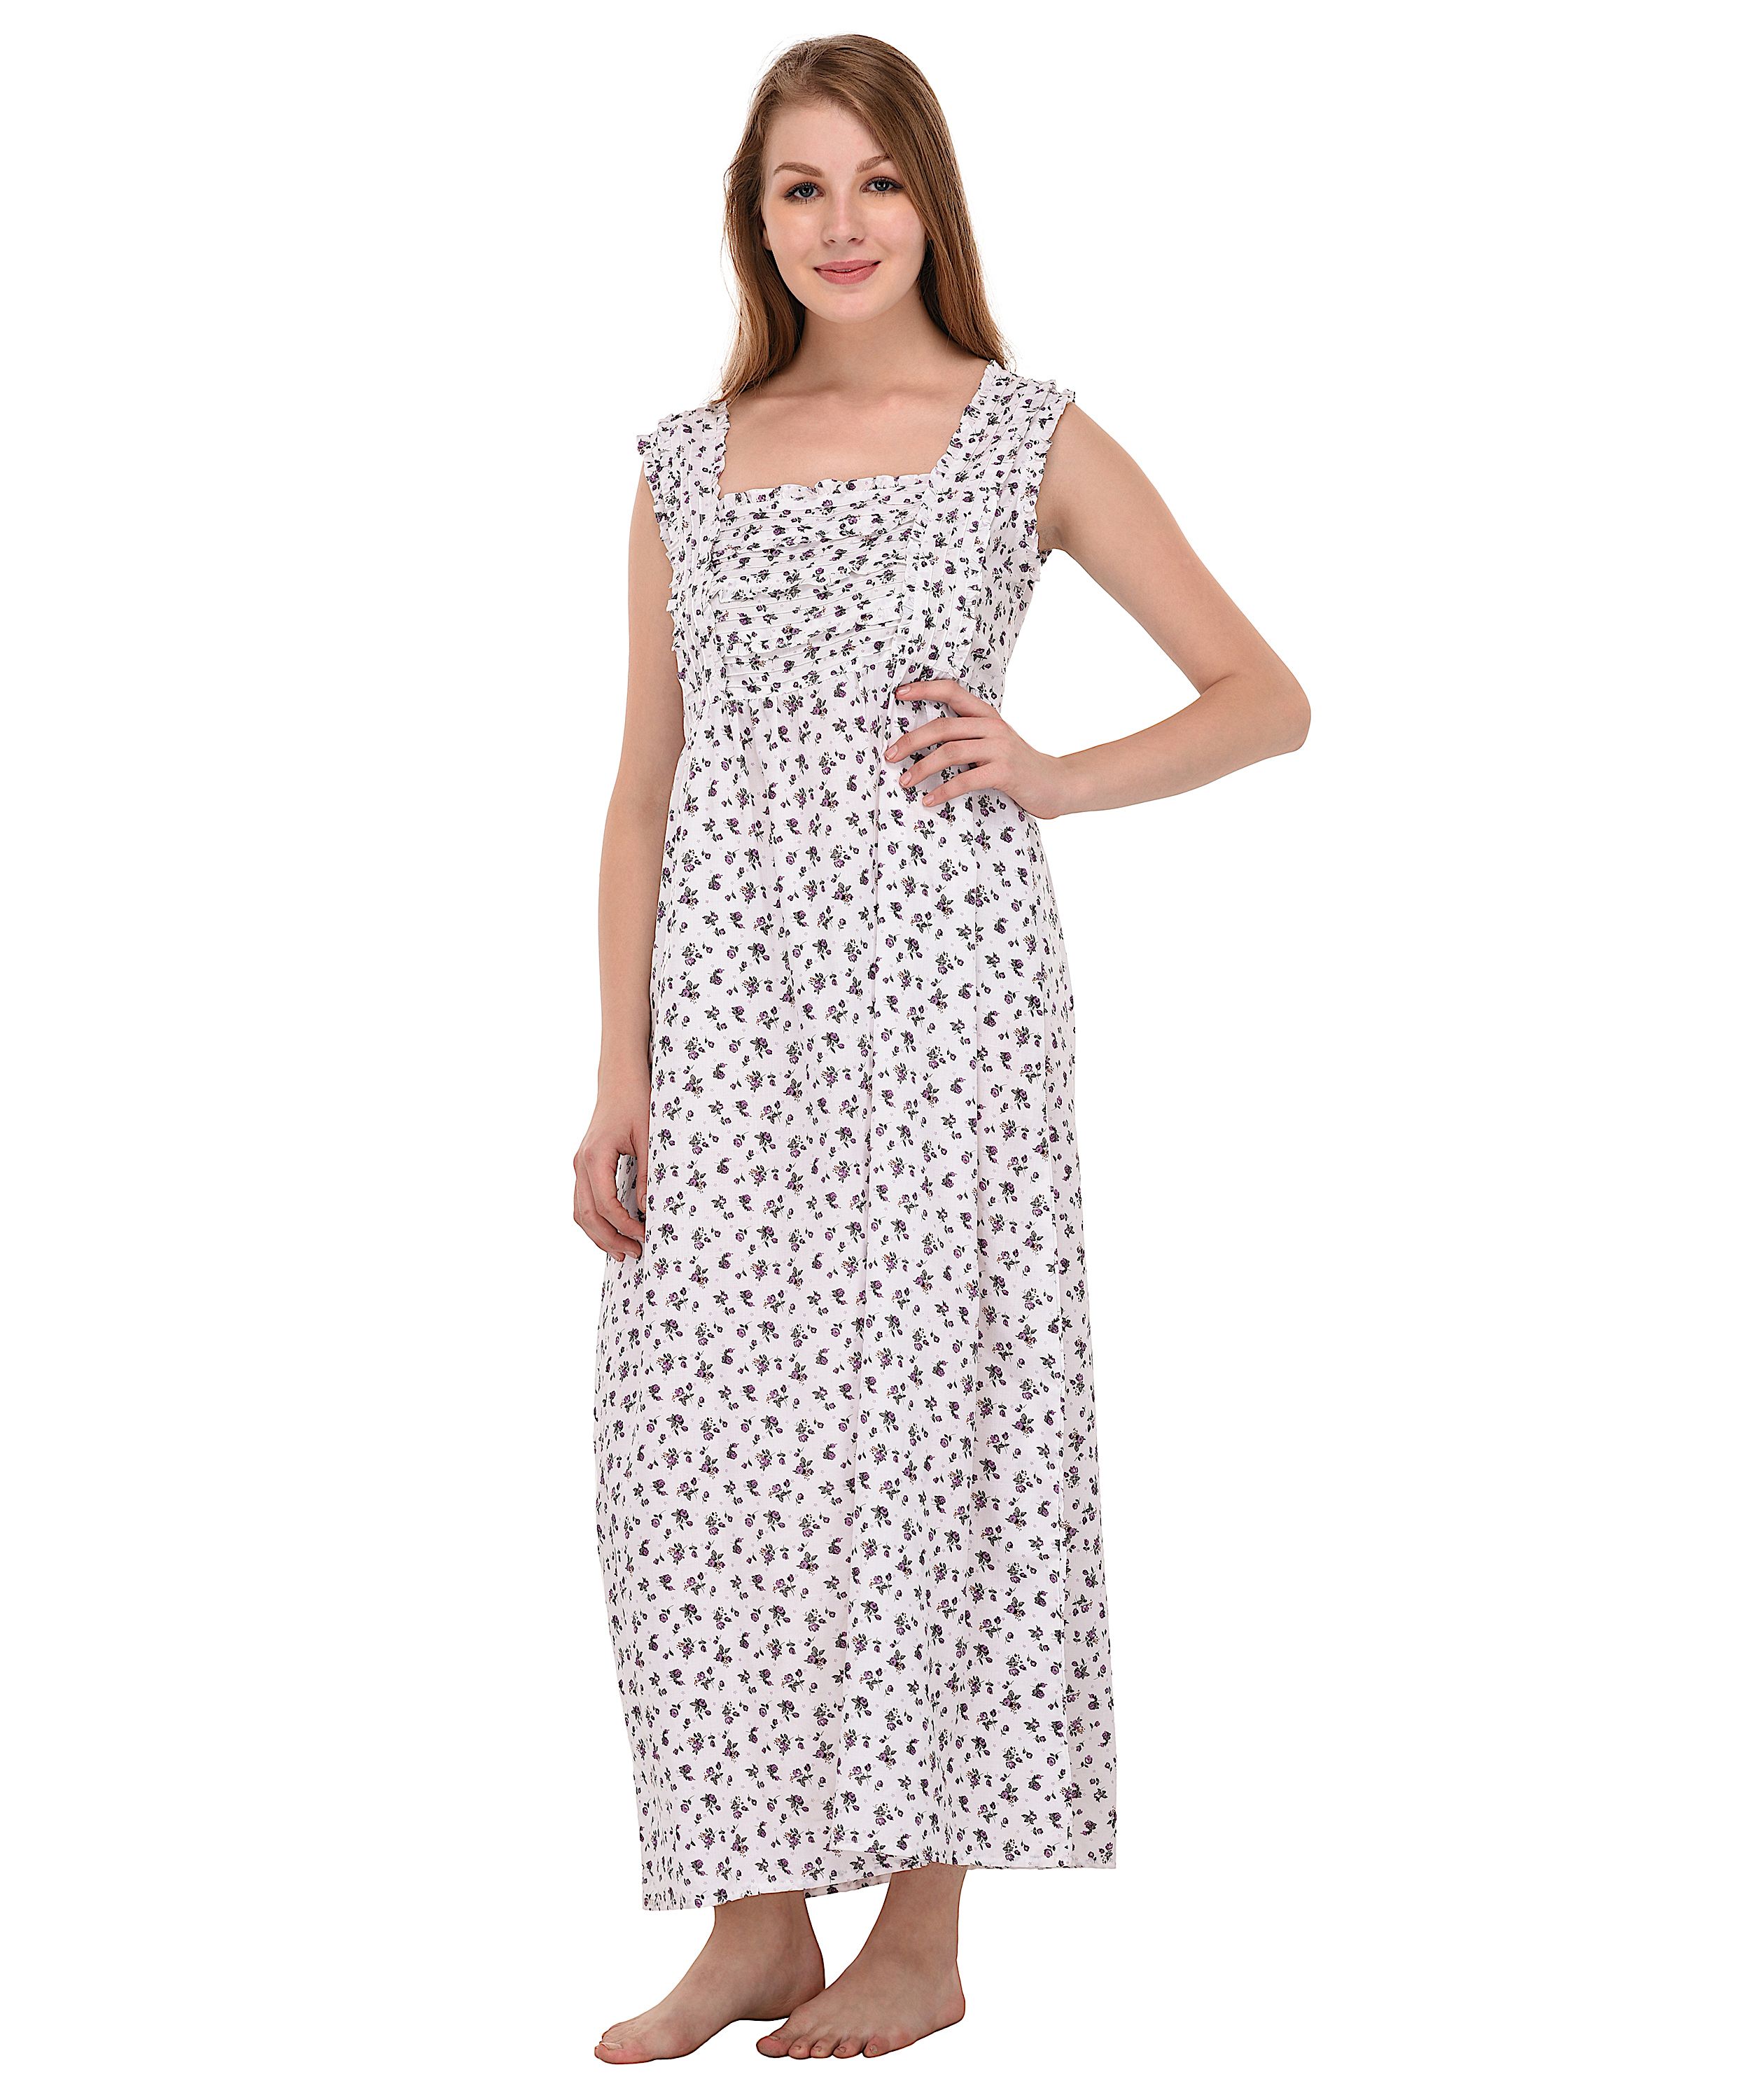 Cotton Lane Wrinkle-Resistant Printed Dress D224PAS | COTTON LANE